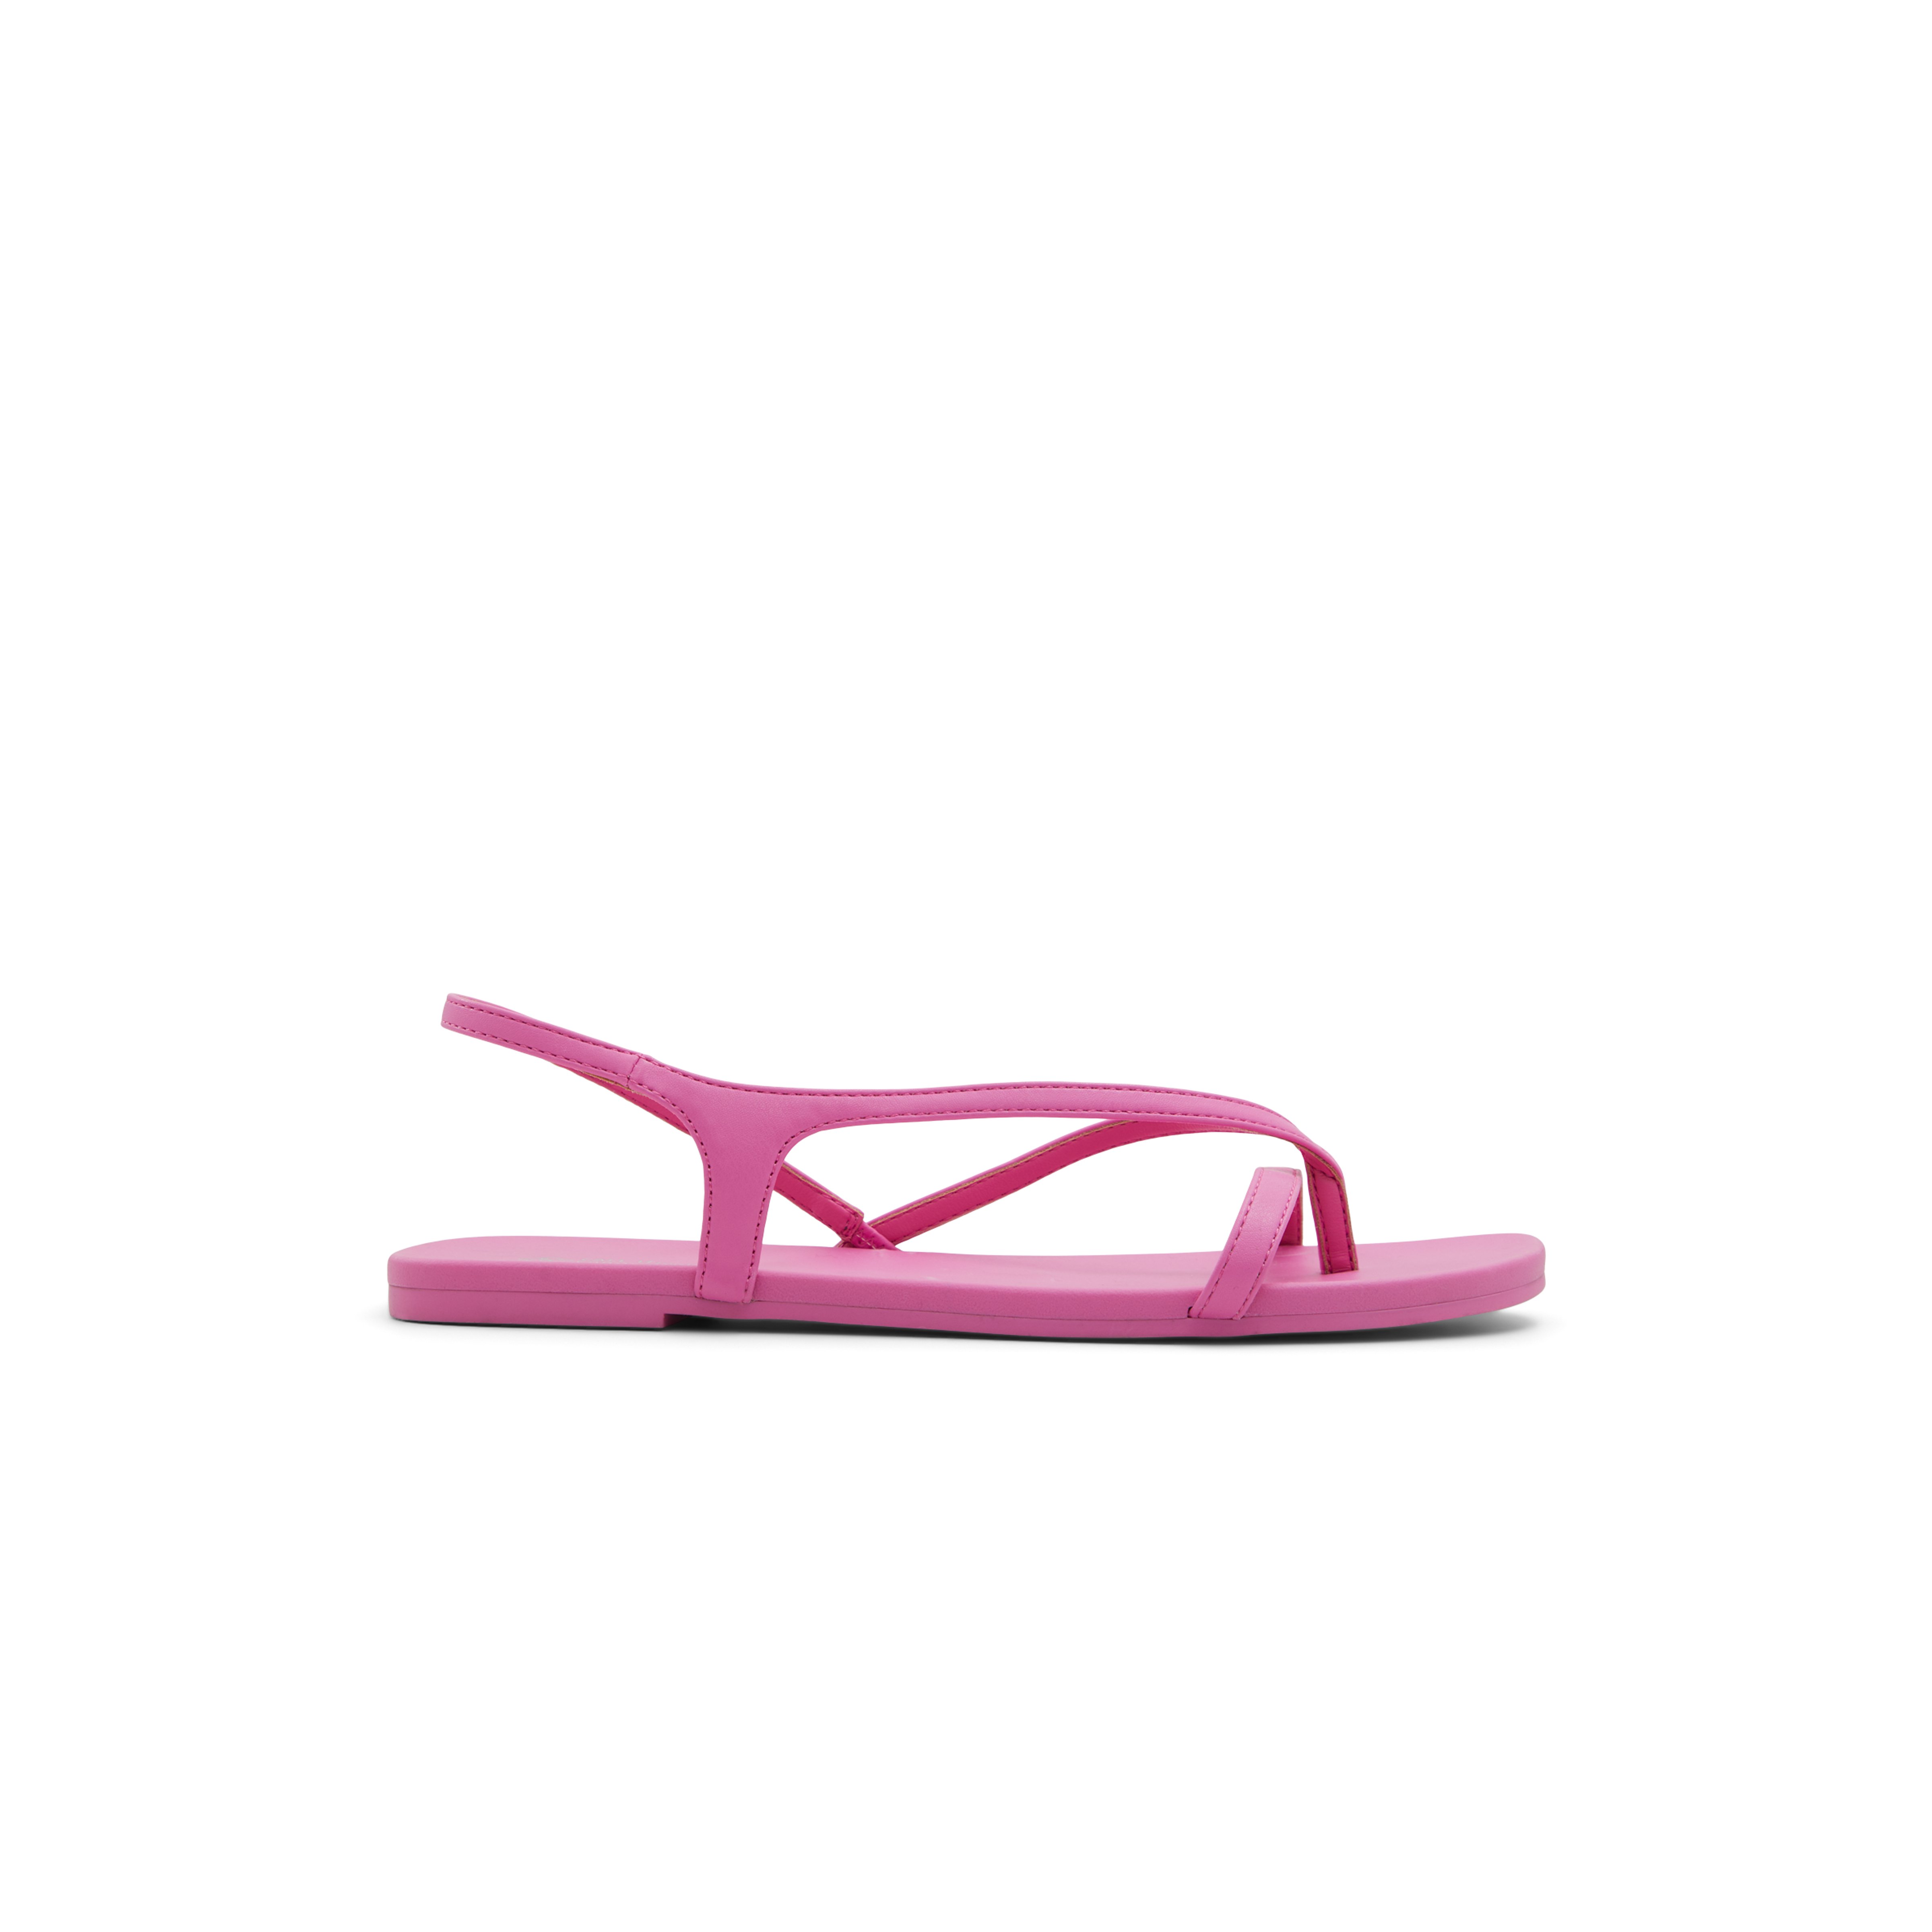 Montebello Women's Pink Flat Sandals image number 0